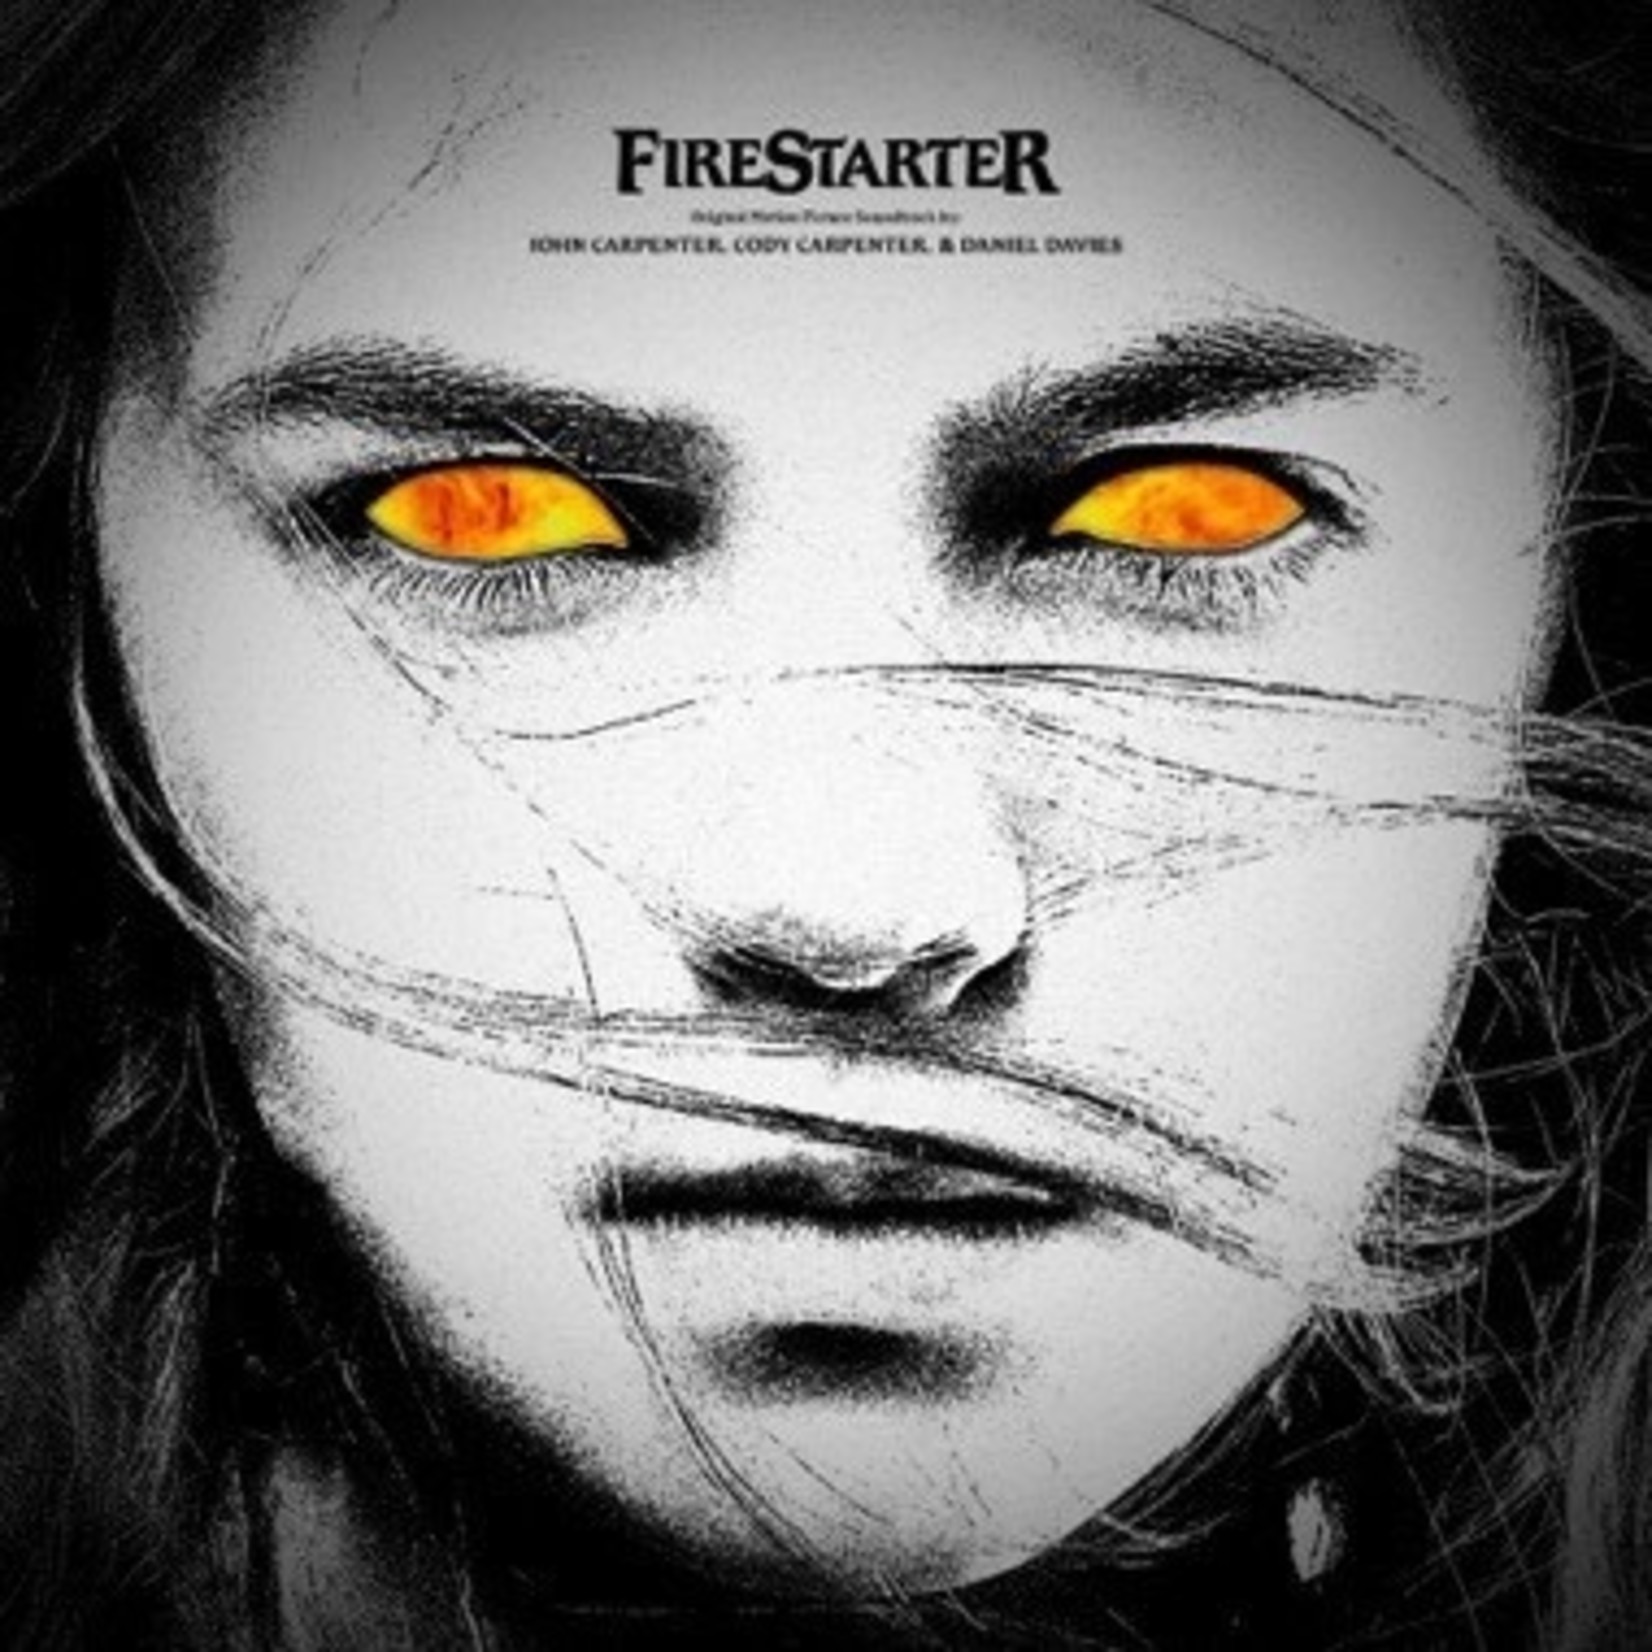 Sacred Bones John Carpenter, Cody Carpenter & Daniel Davies - Firestarter OST (LP) [Yellow/Bone]